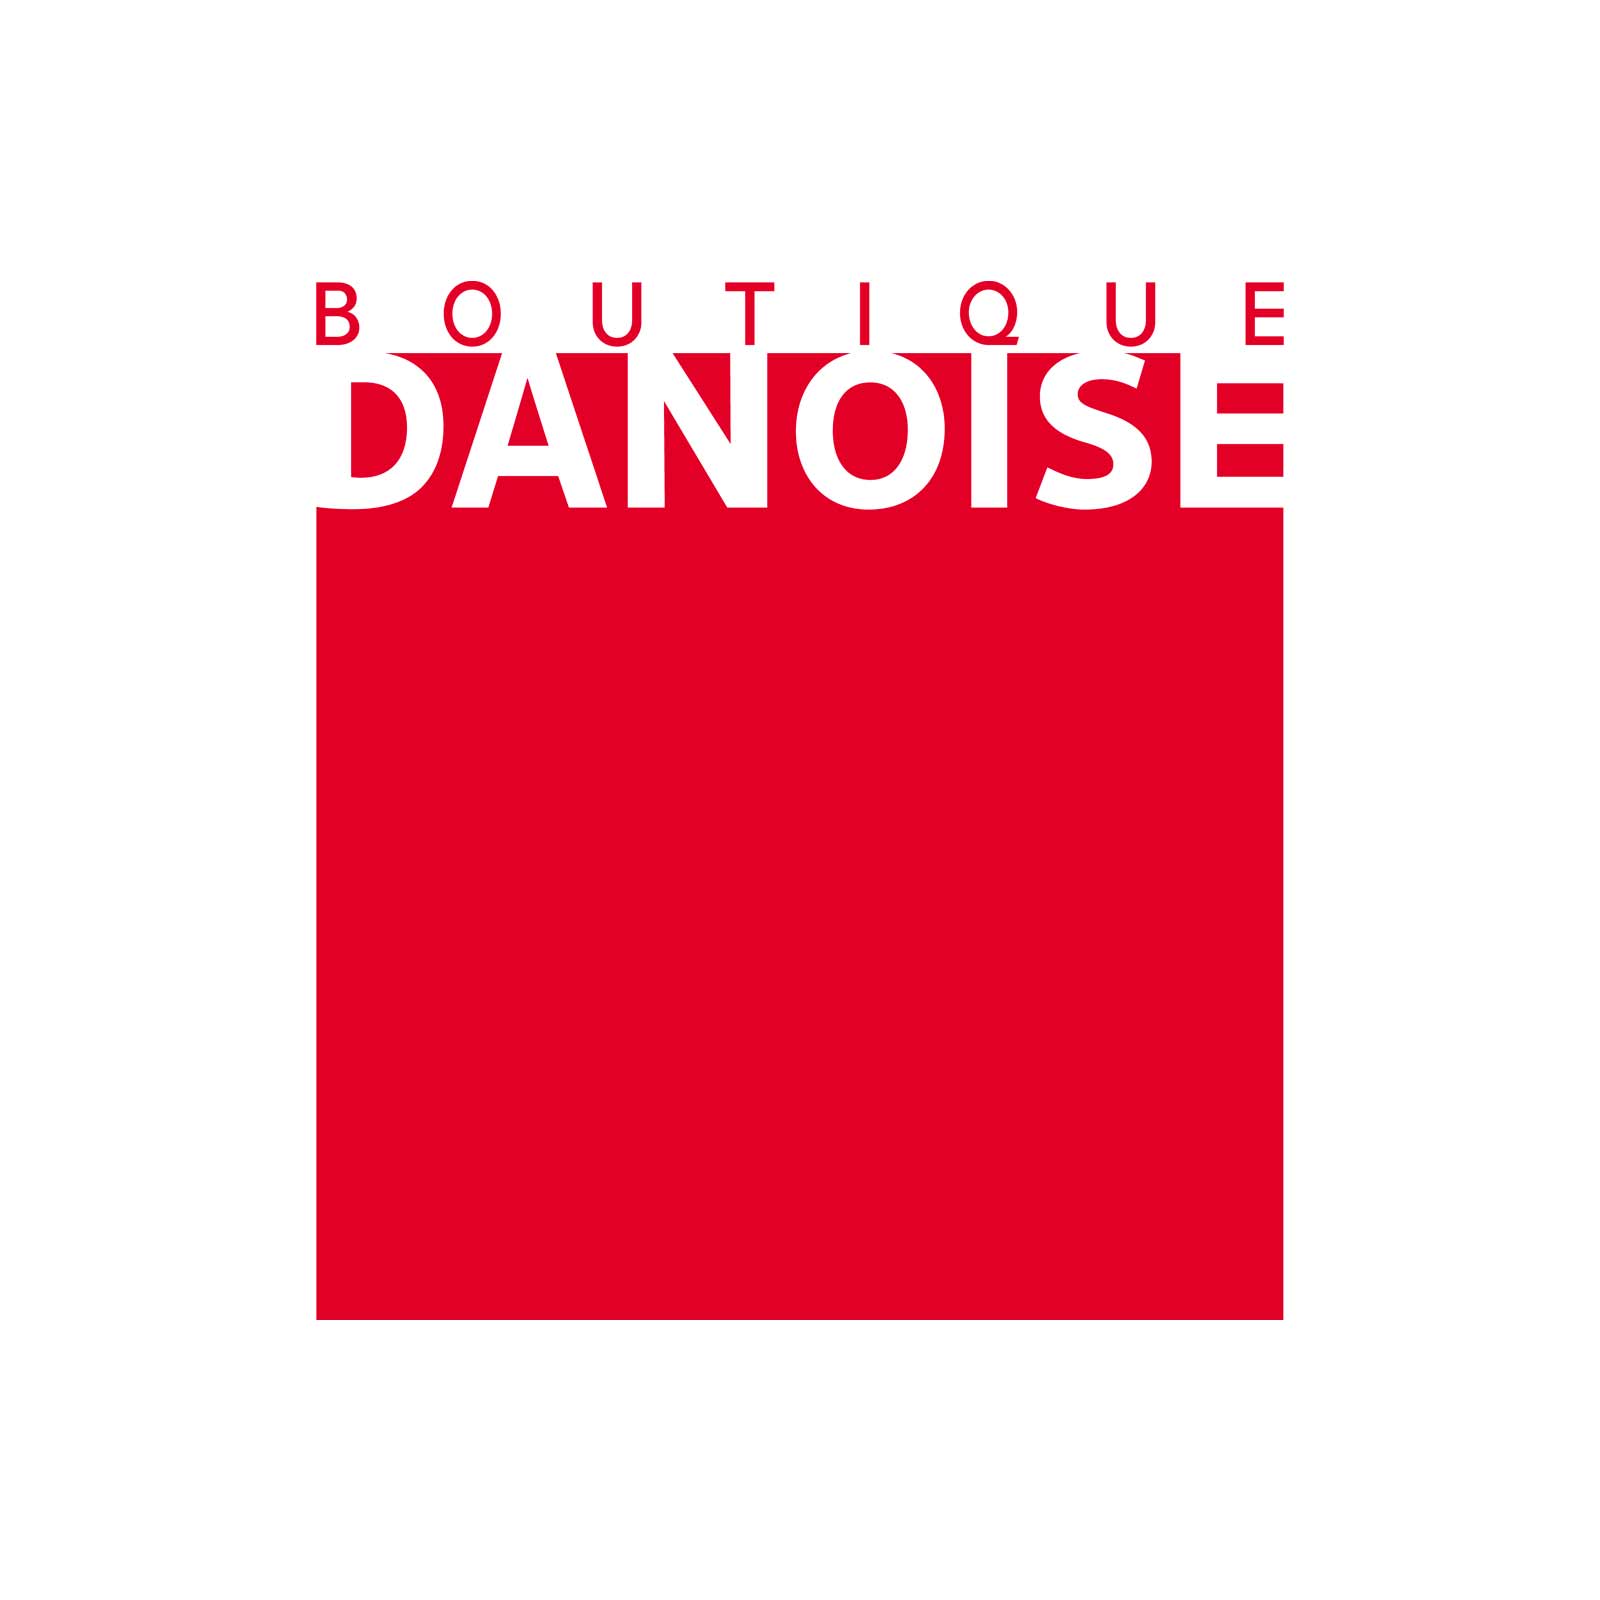 Online-Shop Erstellung Boutique Danoise AG Basel Online-Shop Realisierungen, SEO, Graphic-Design, Fotografie, Foto-Retouching und Digital Photo-Composing ShowMyProject Basel